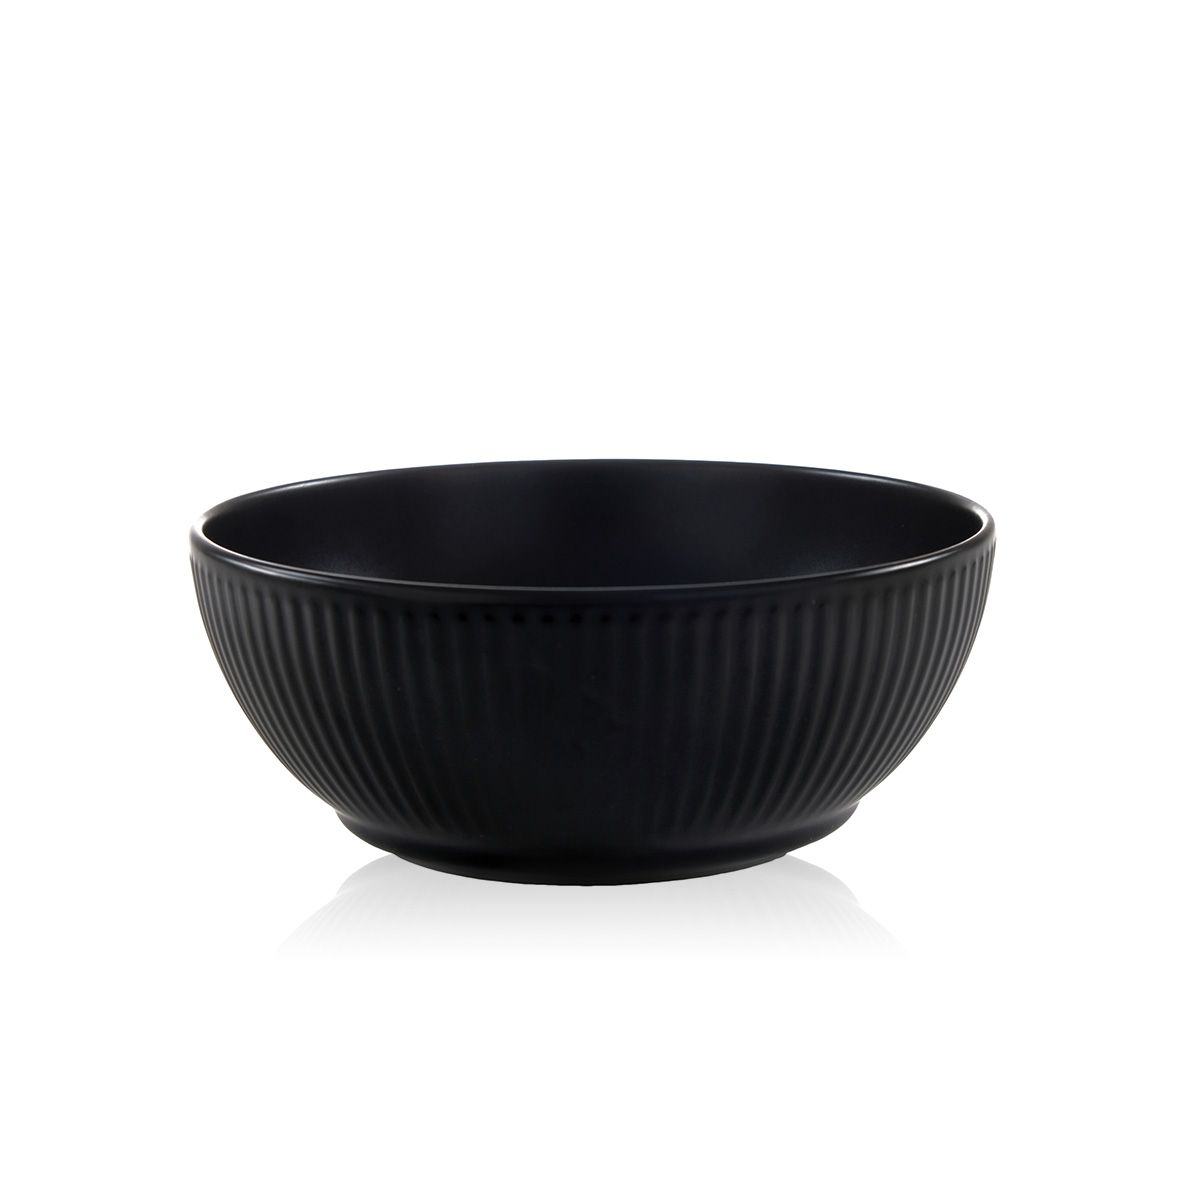 Bodum Douro Porcelain Bowls Black Matt, 4 stk.